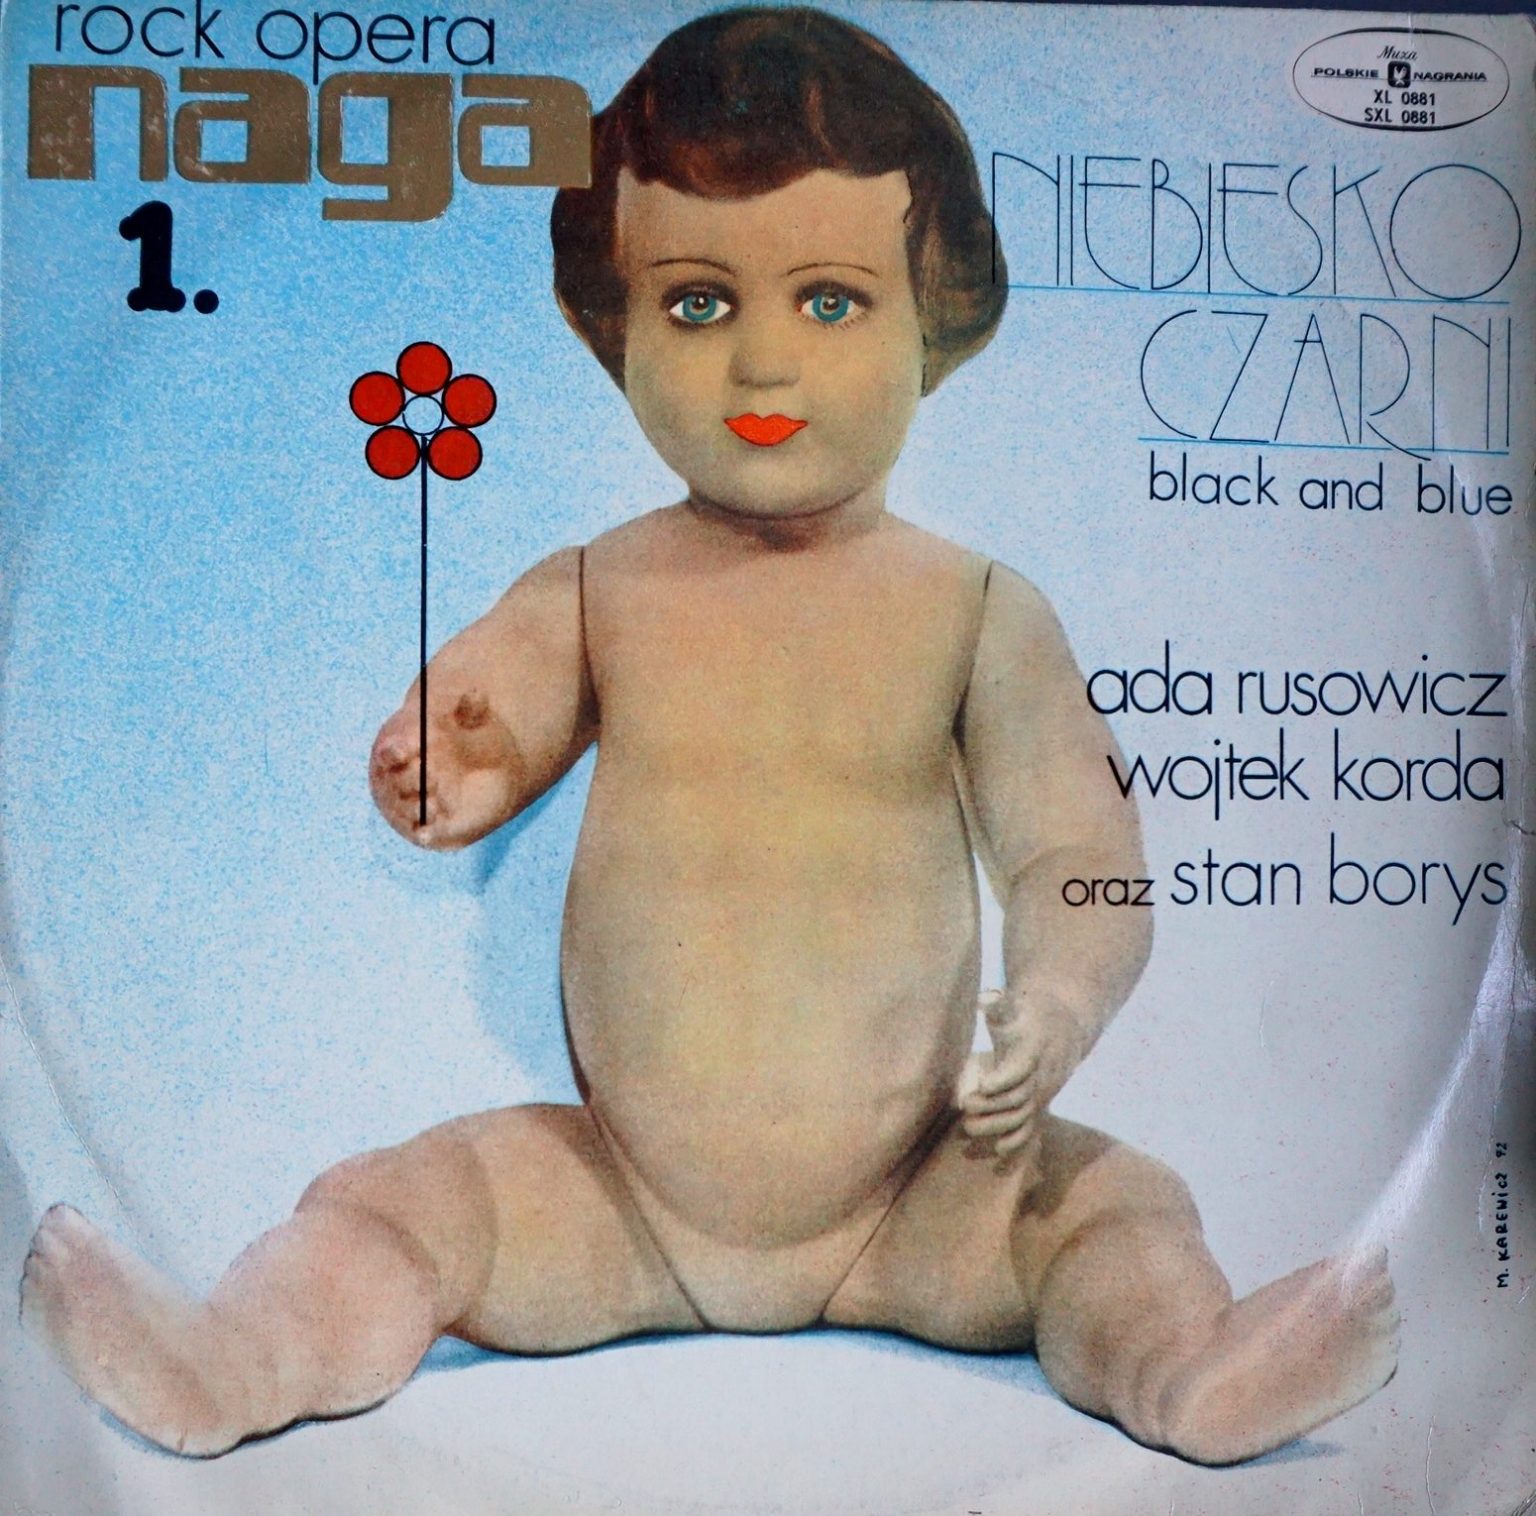 Niebiesko Czarni – Rock-Opera Naga I [Vinyl LP] (VG/VG)